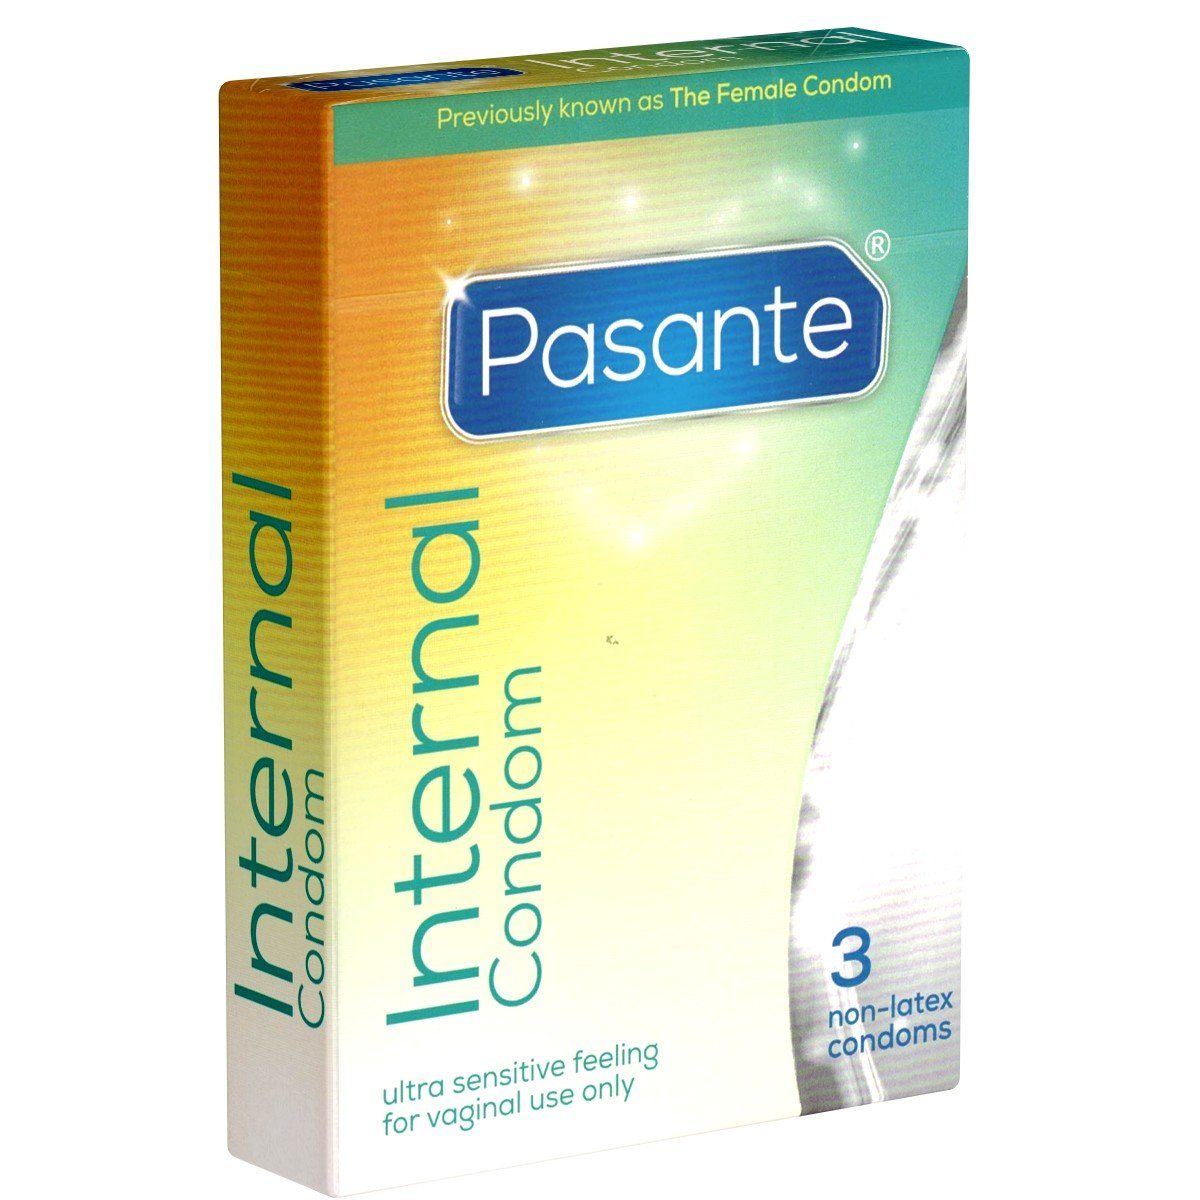 Pasante Kondome Internal Condom (Femidom) Packung mit, 3 St., Frauenkondome, aktive Verhütung für Frauen, latexfreie Frauenkondome für hormonfreie Verhütung